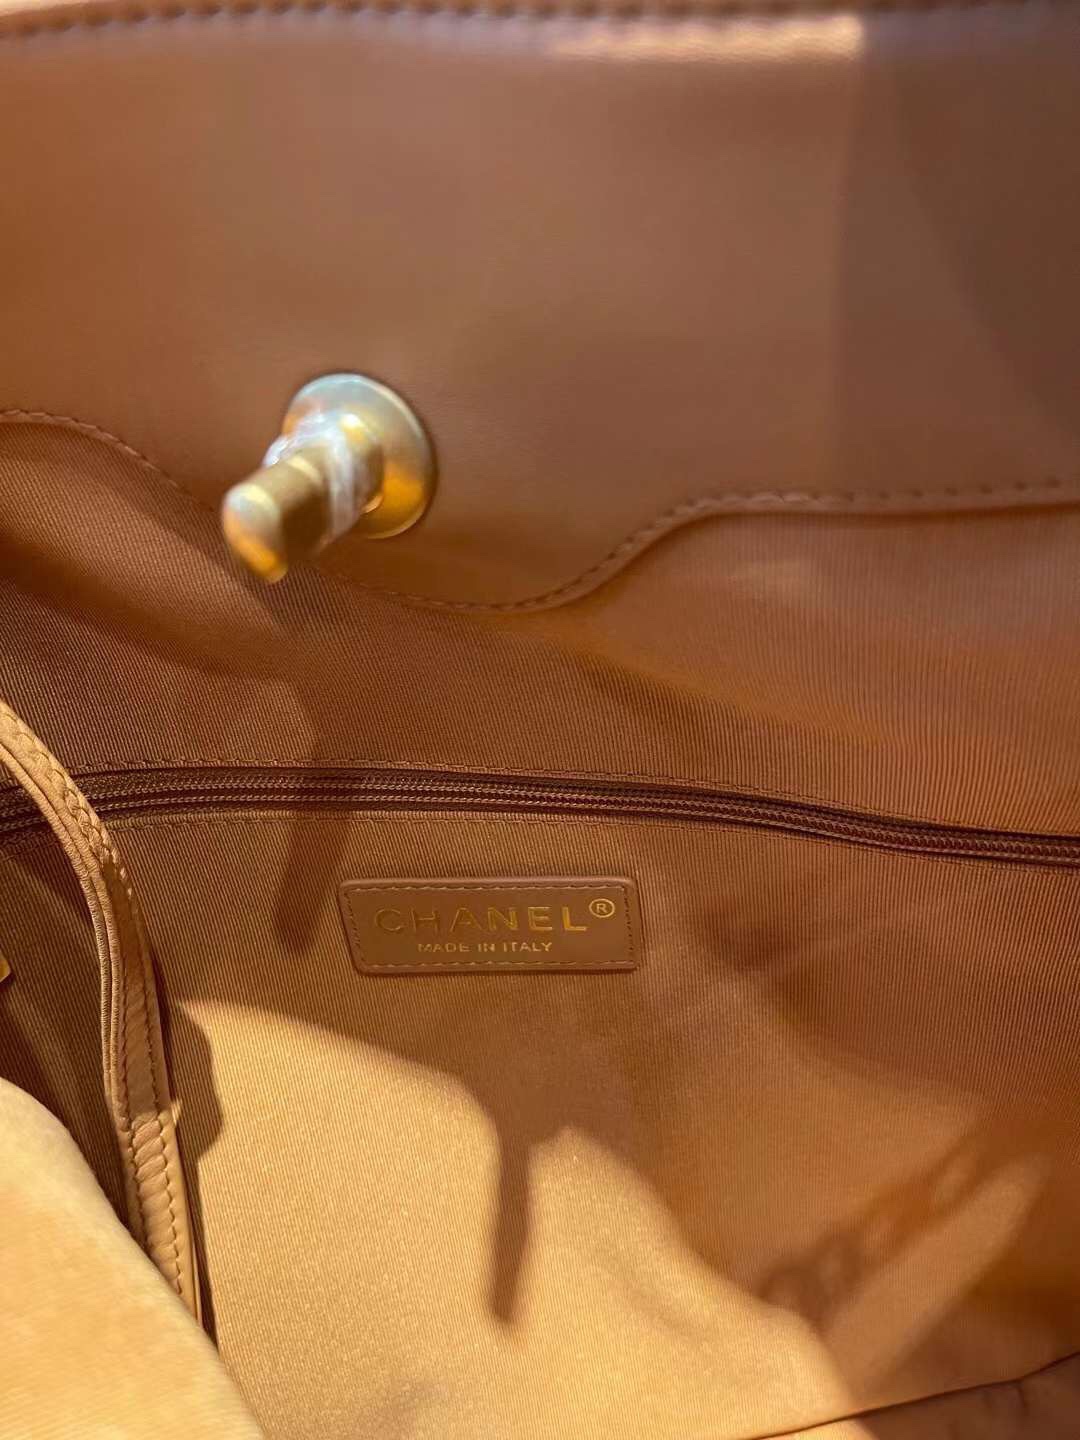 【P2180】香奈儿女包价格 Chanel2021新款菱格纹嬉皮包水桶包 棕色